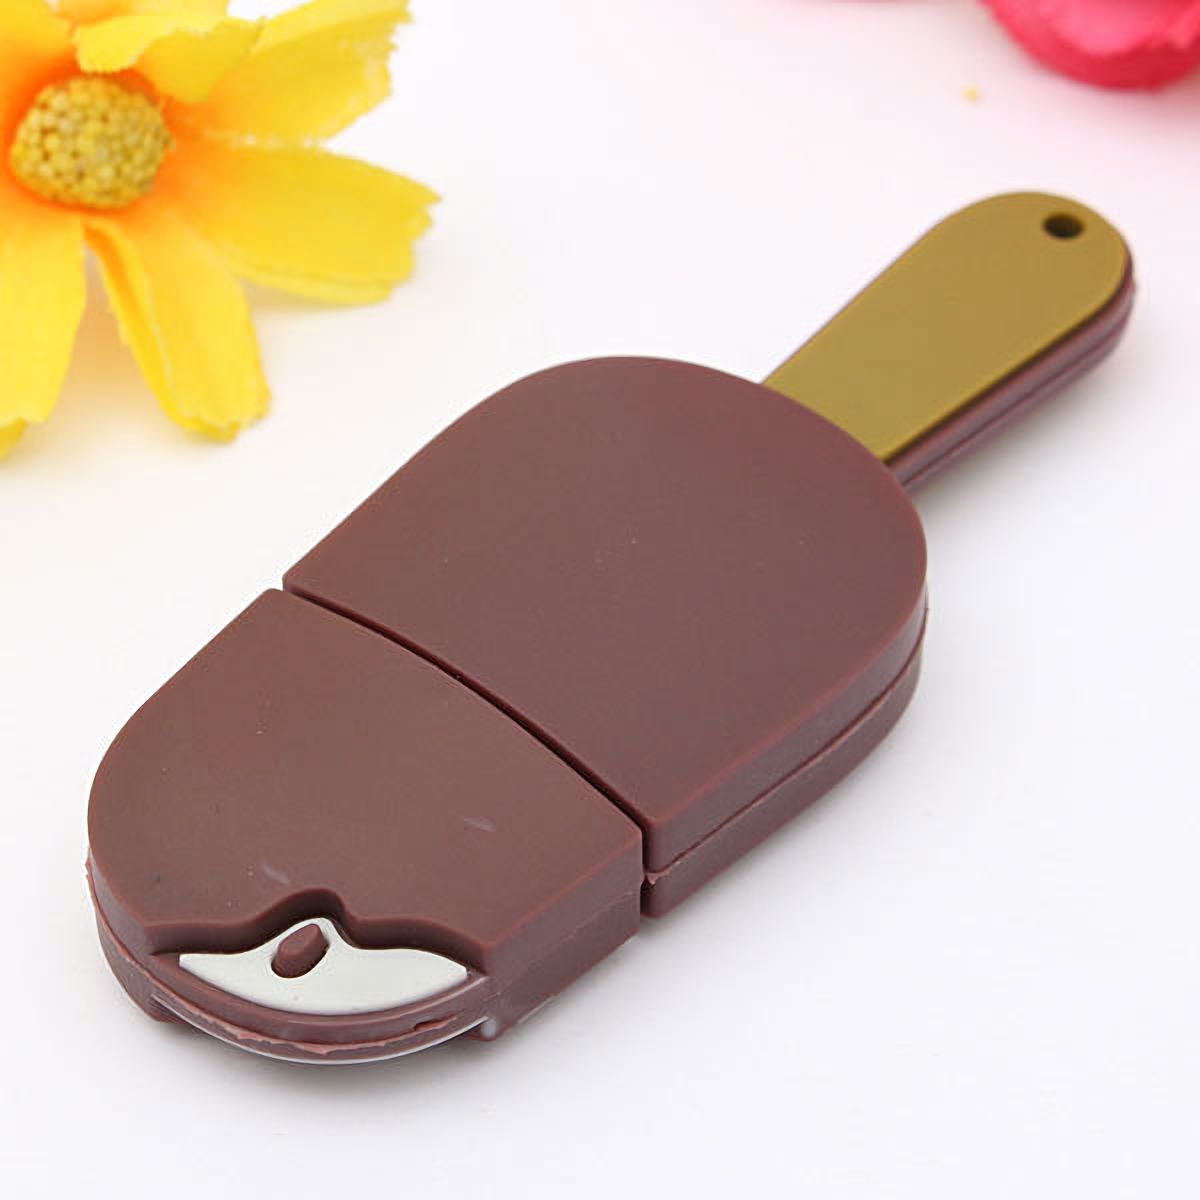 16GB-USB20-Chocolate-Ice-Cream-Model-Flash-Drive-Memory-U-Disk-961651-1